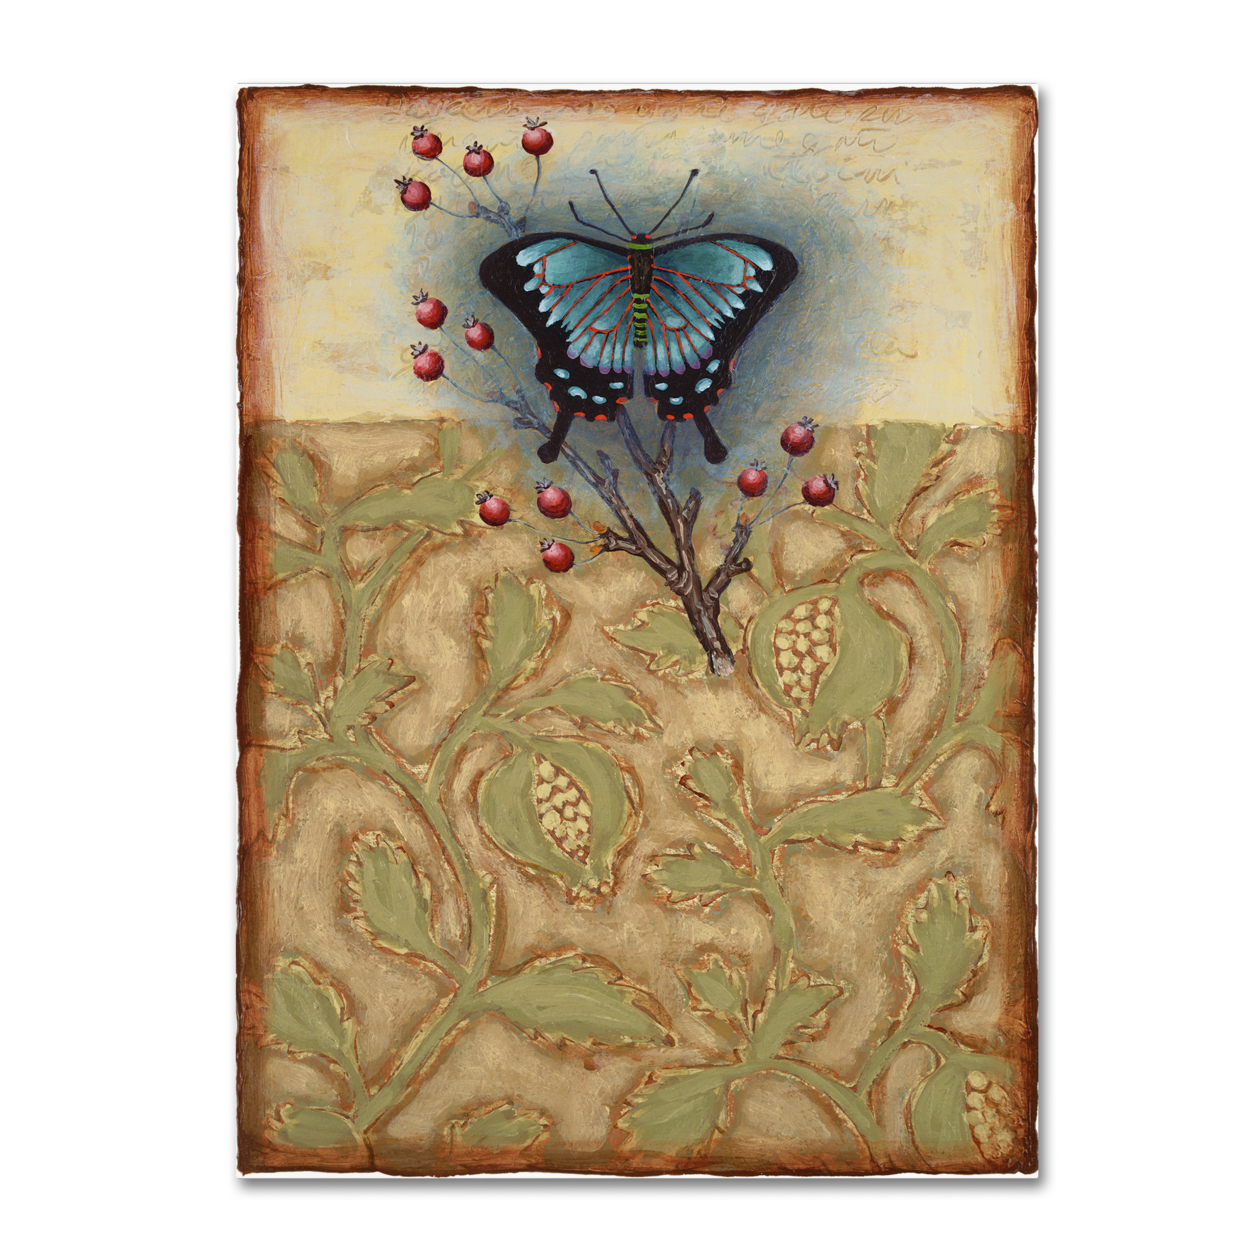 Rachel Paxton 'Salt Meadow Butterfly' Canvas Wall Art 35 X 47 Inches